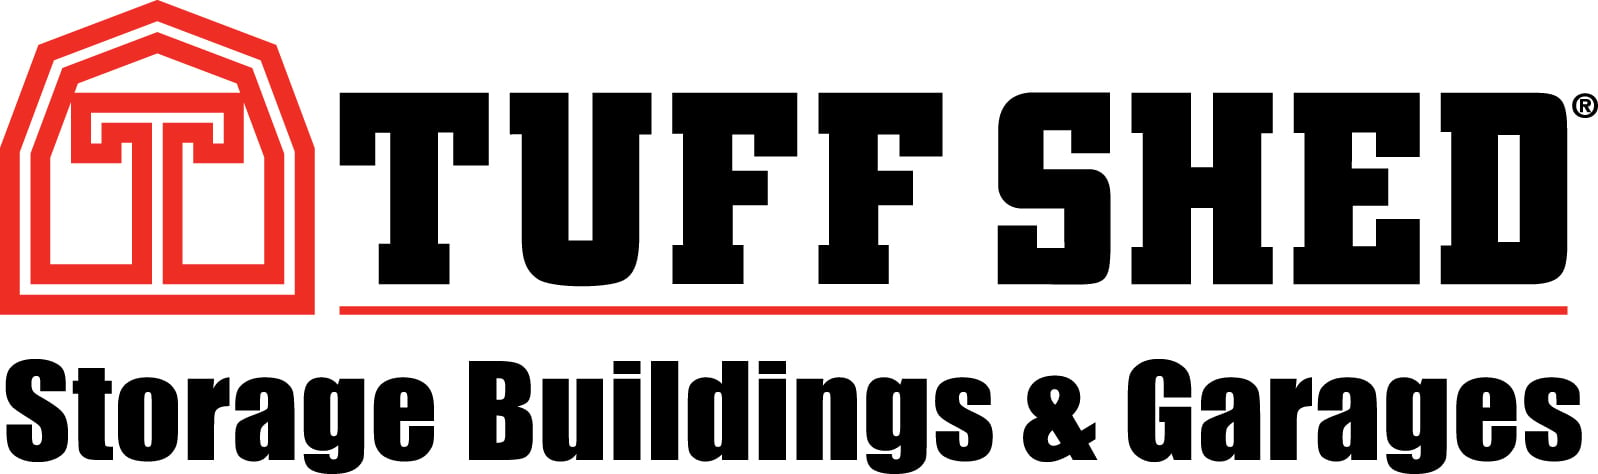 Tuff Shed Logo